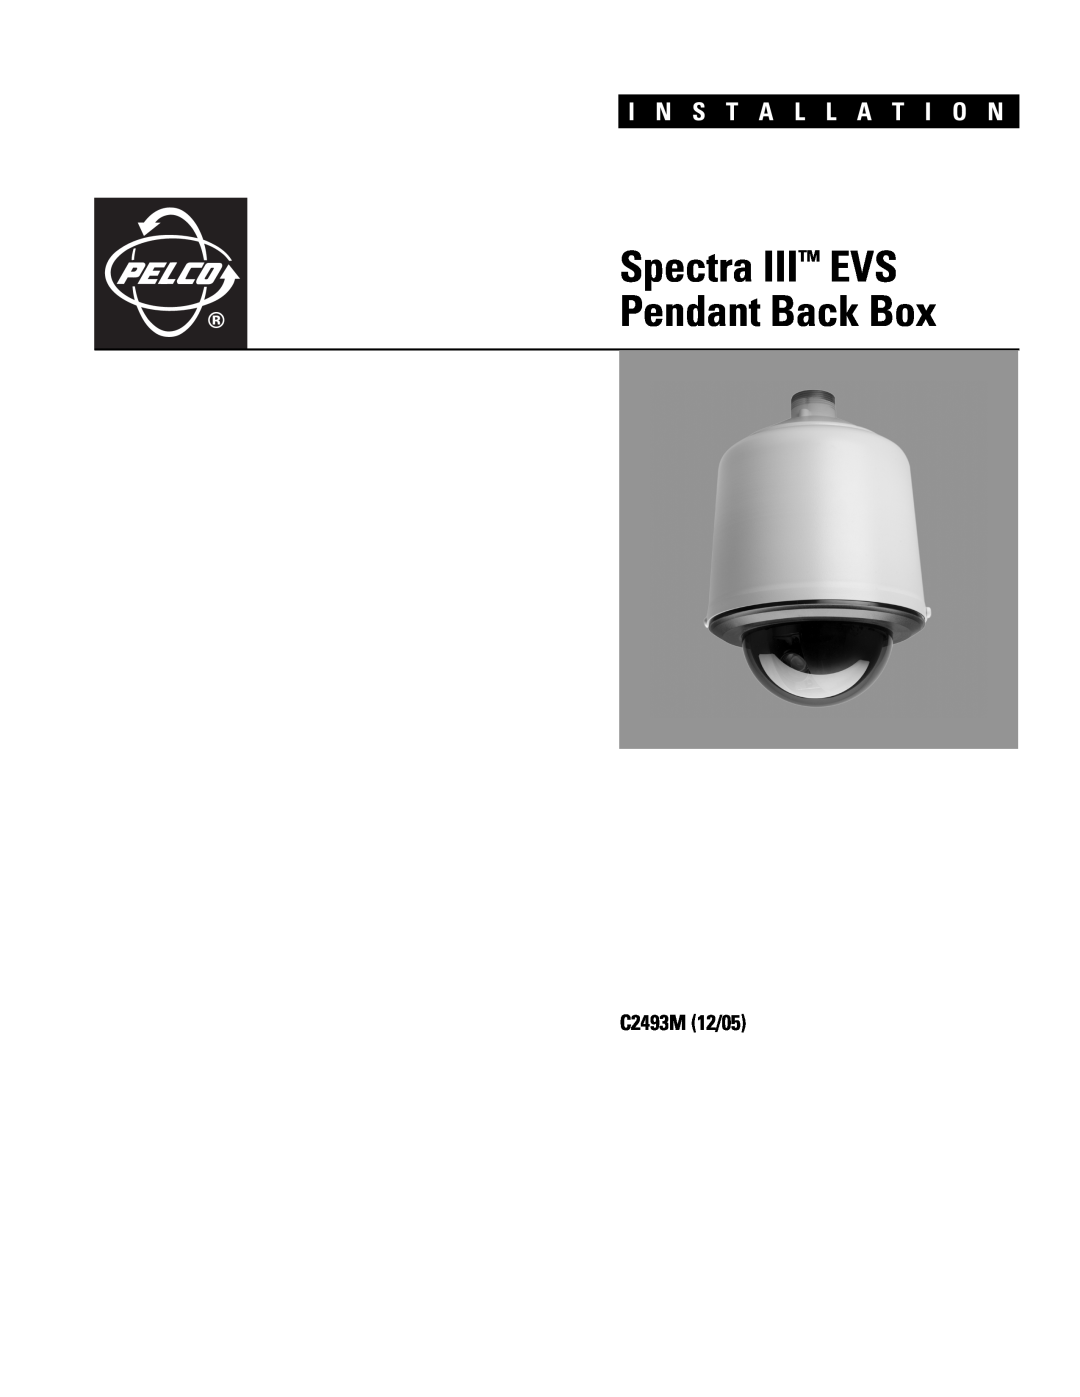 Pelco manual Spectra III EVS Pendant Back Box, I N S T A L L A T I O N, C2493M 12/05 